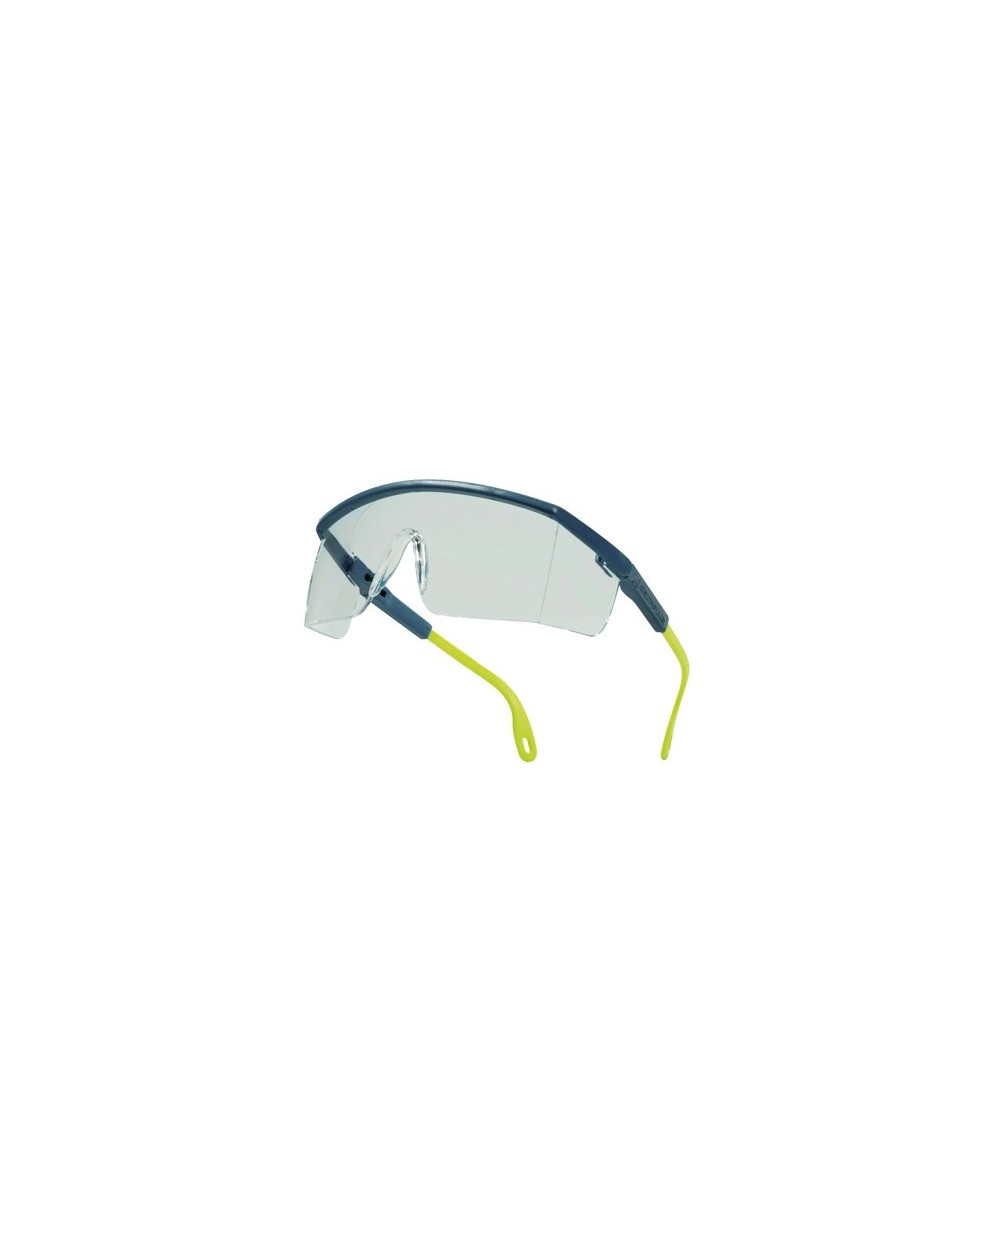 Gafas deltaplus de proteccion policarbonato monobloque incoloro color gris amarilla uv400